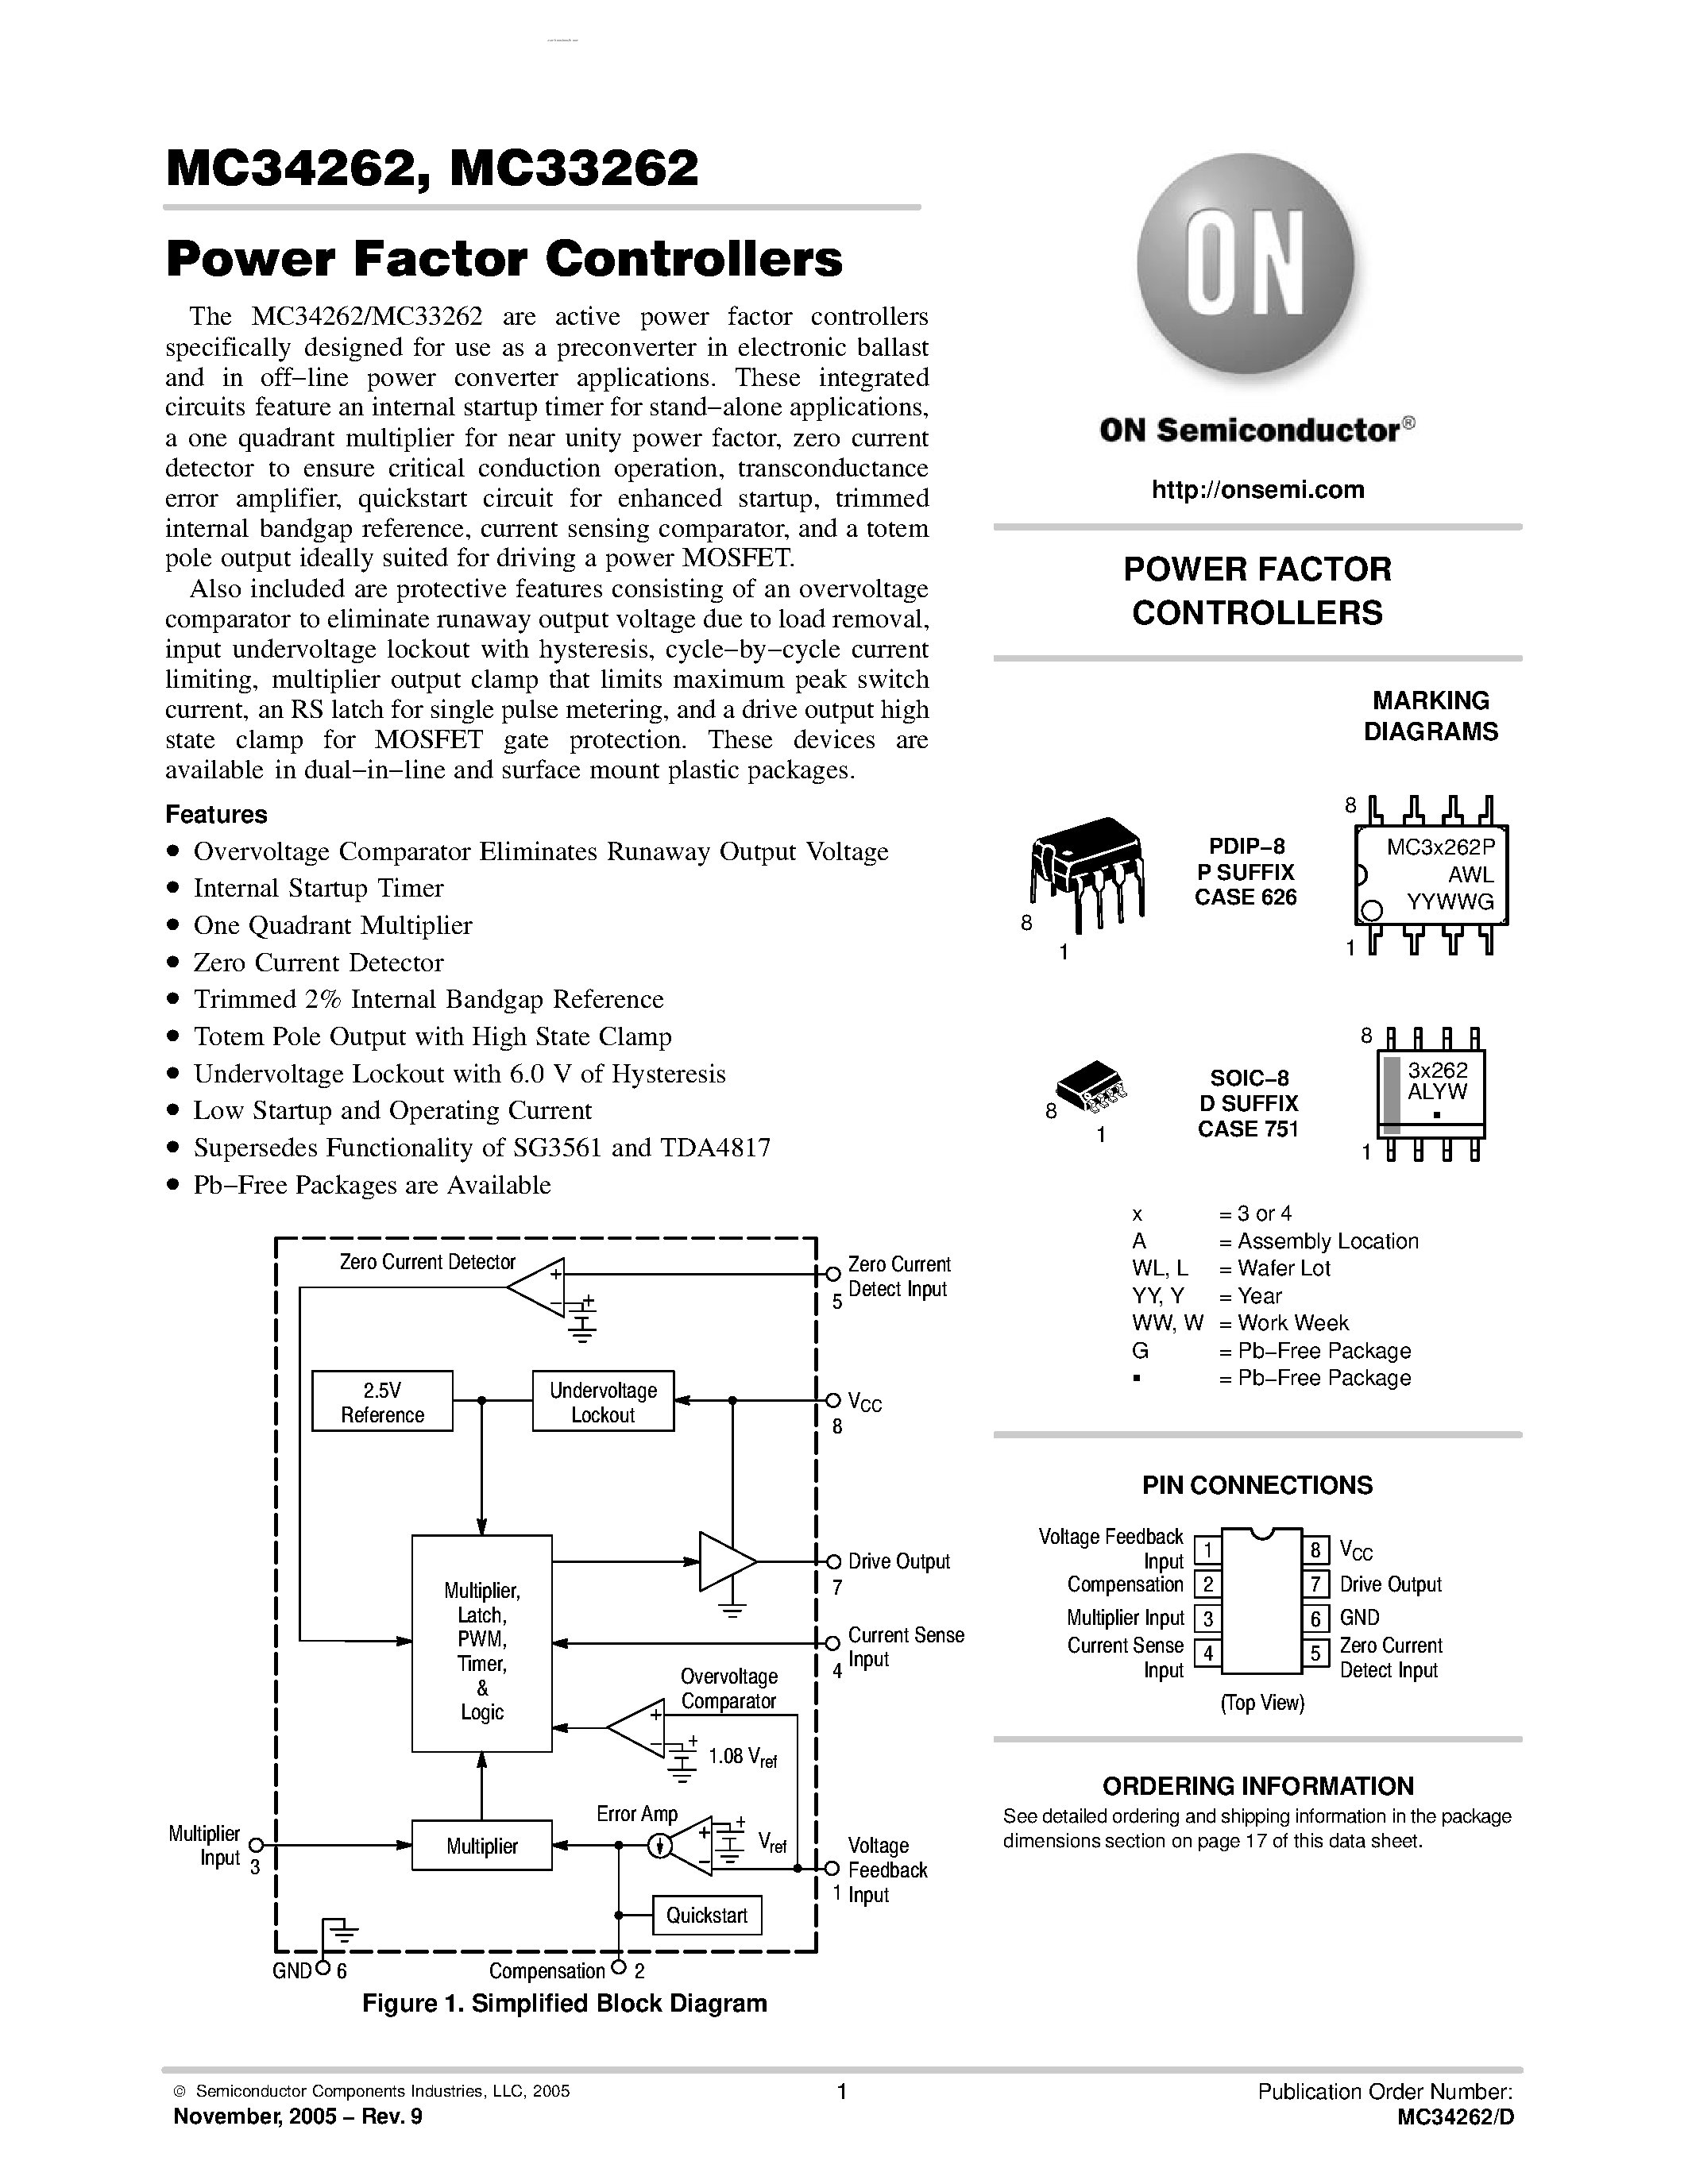 Datasheet MC33262 - (MC33262 / MC34262) Power Factor Controllers page 1